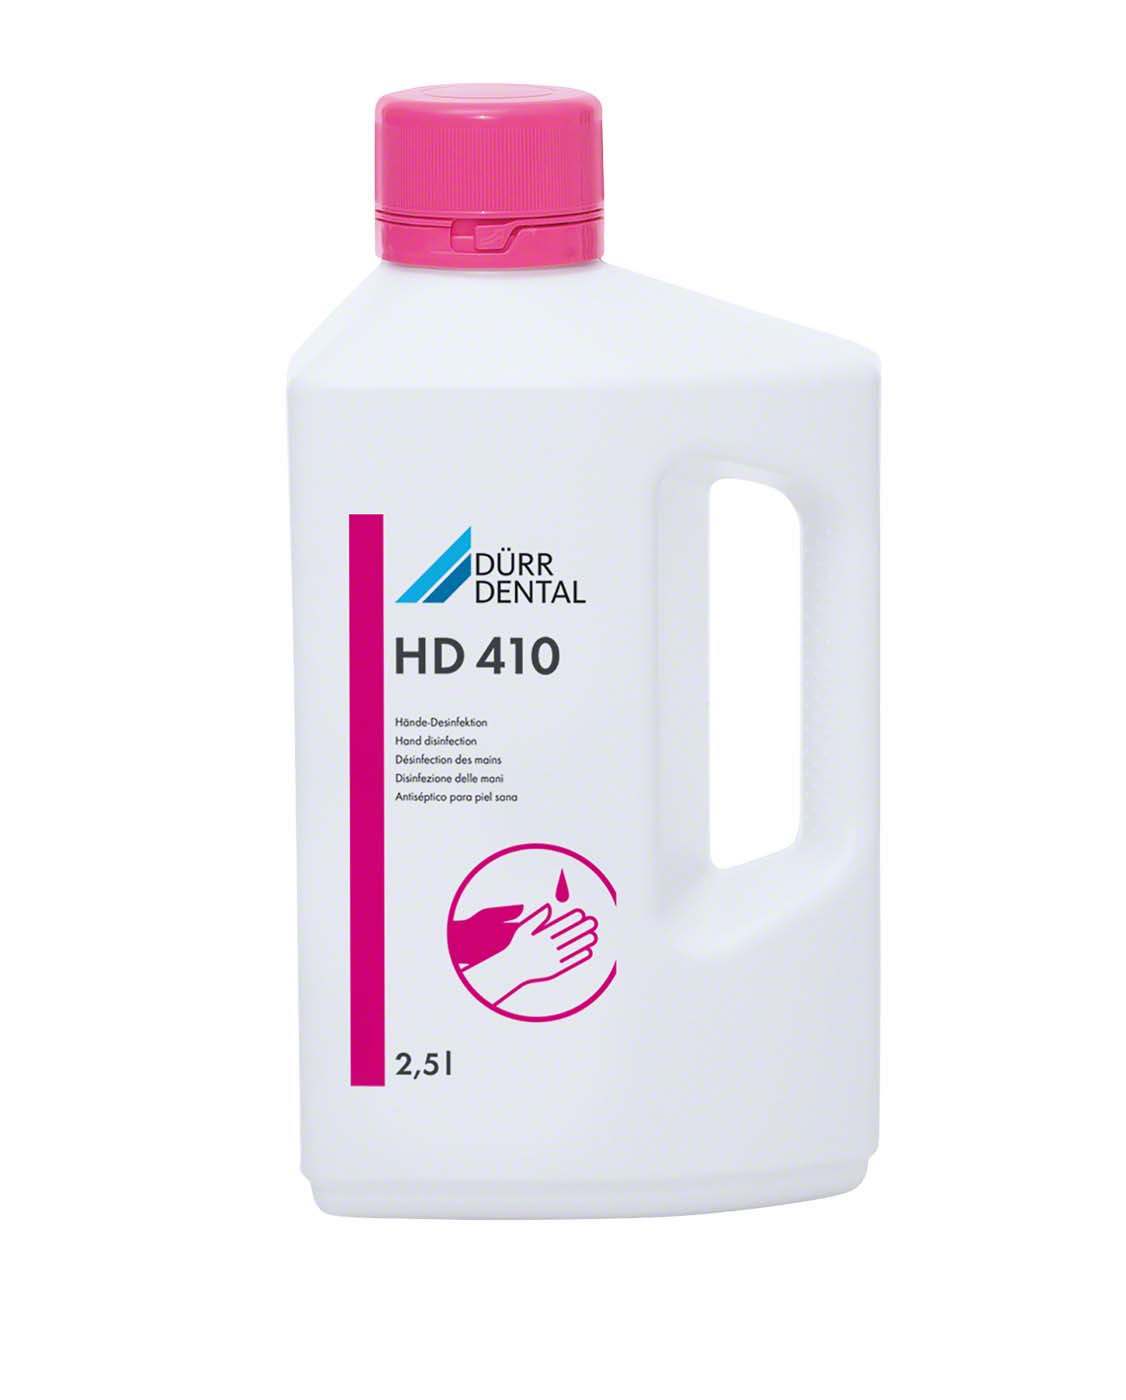 HD 410 Hände-Desinfektion Dürr Dental